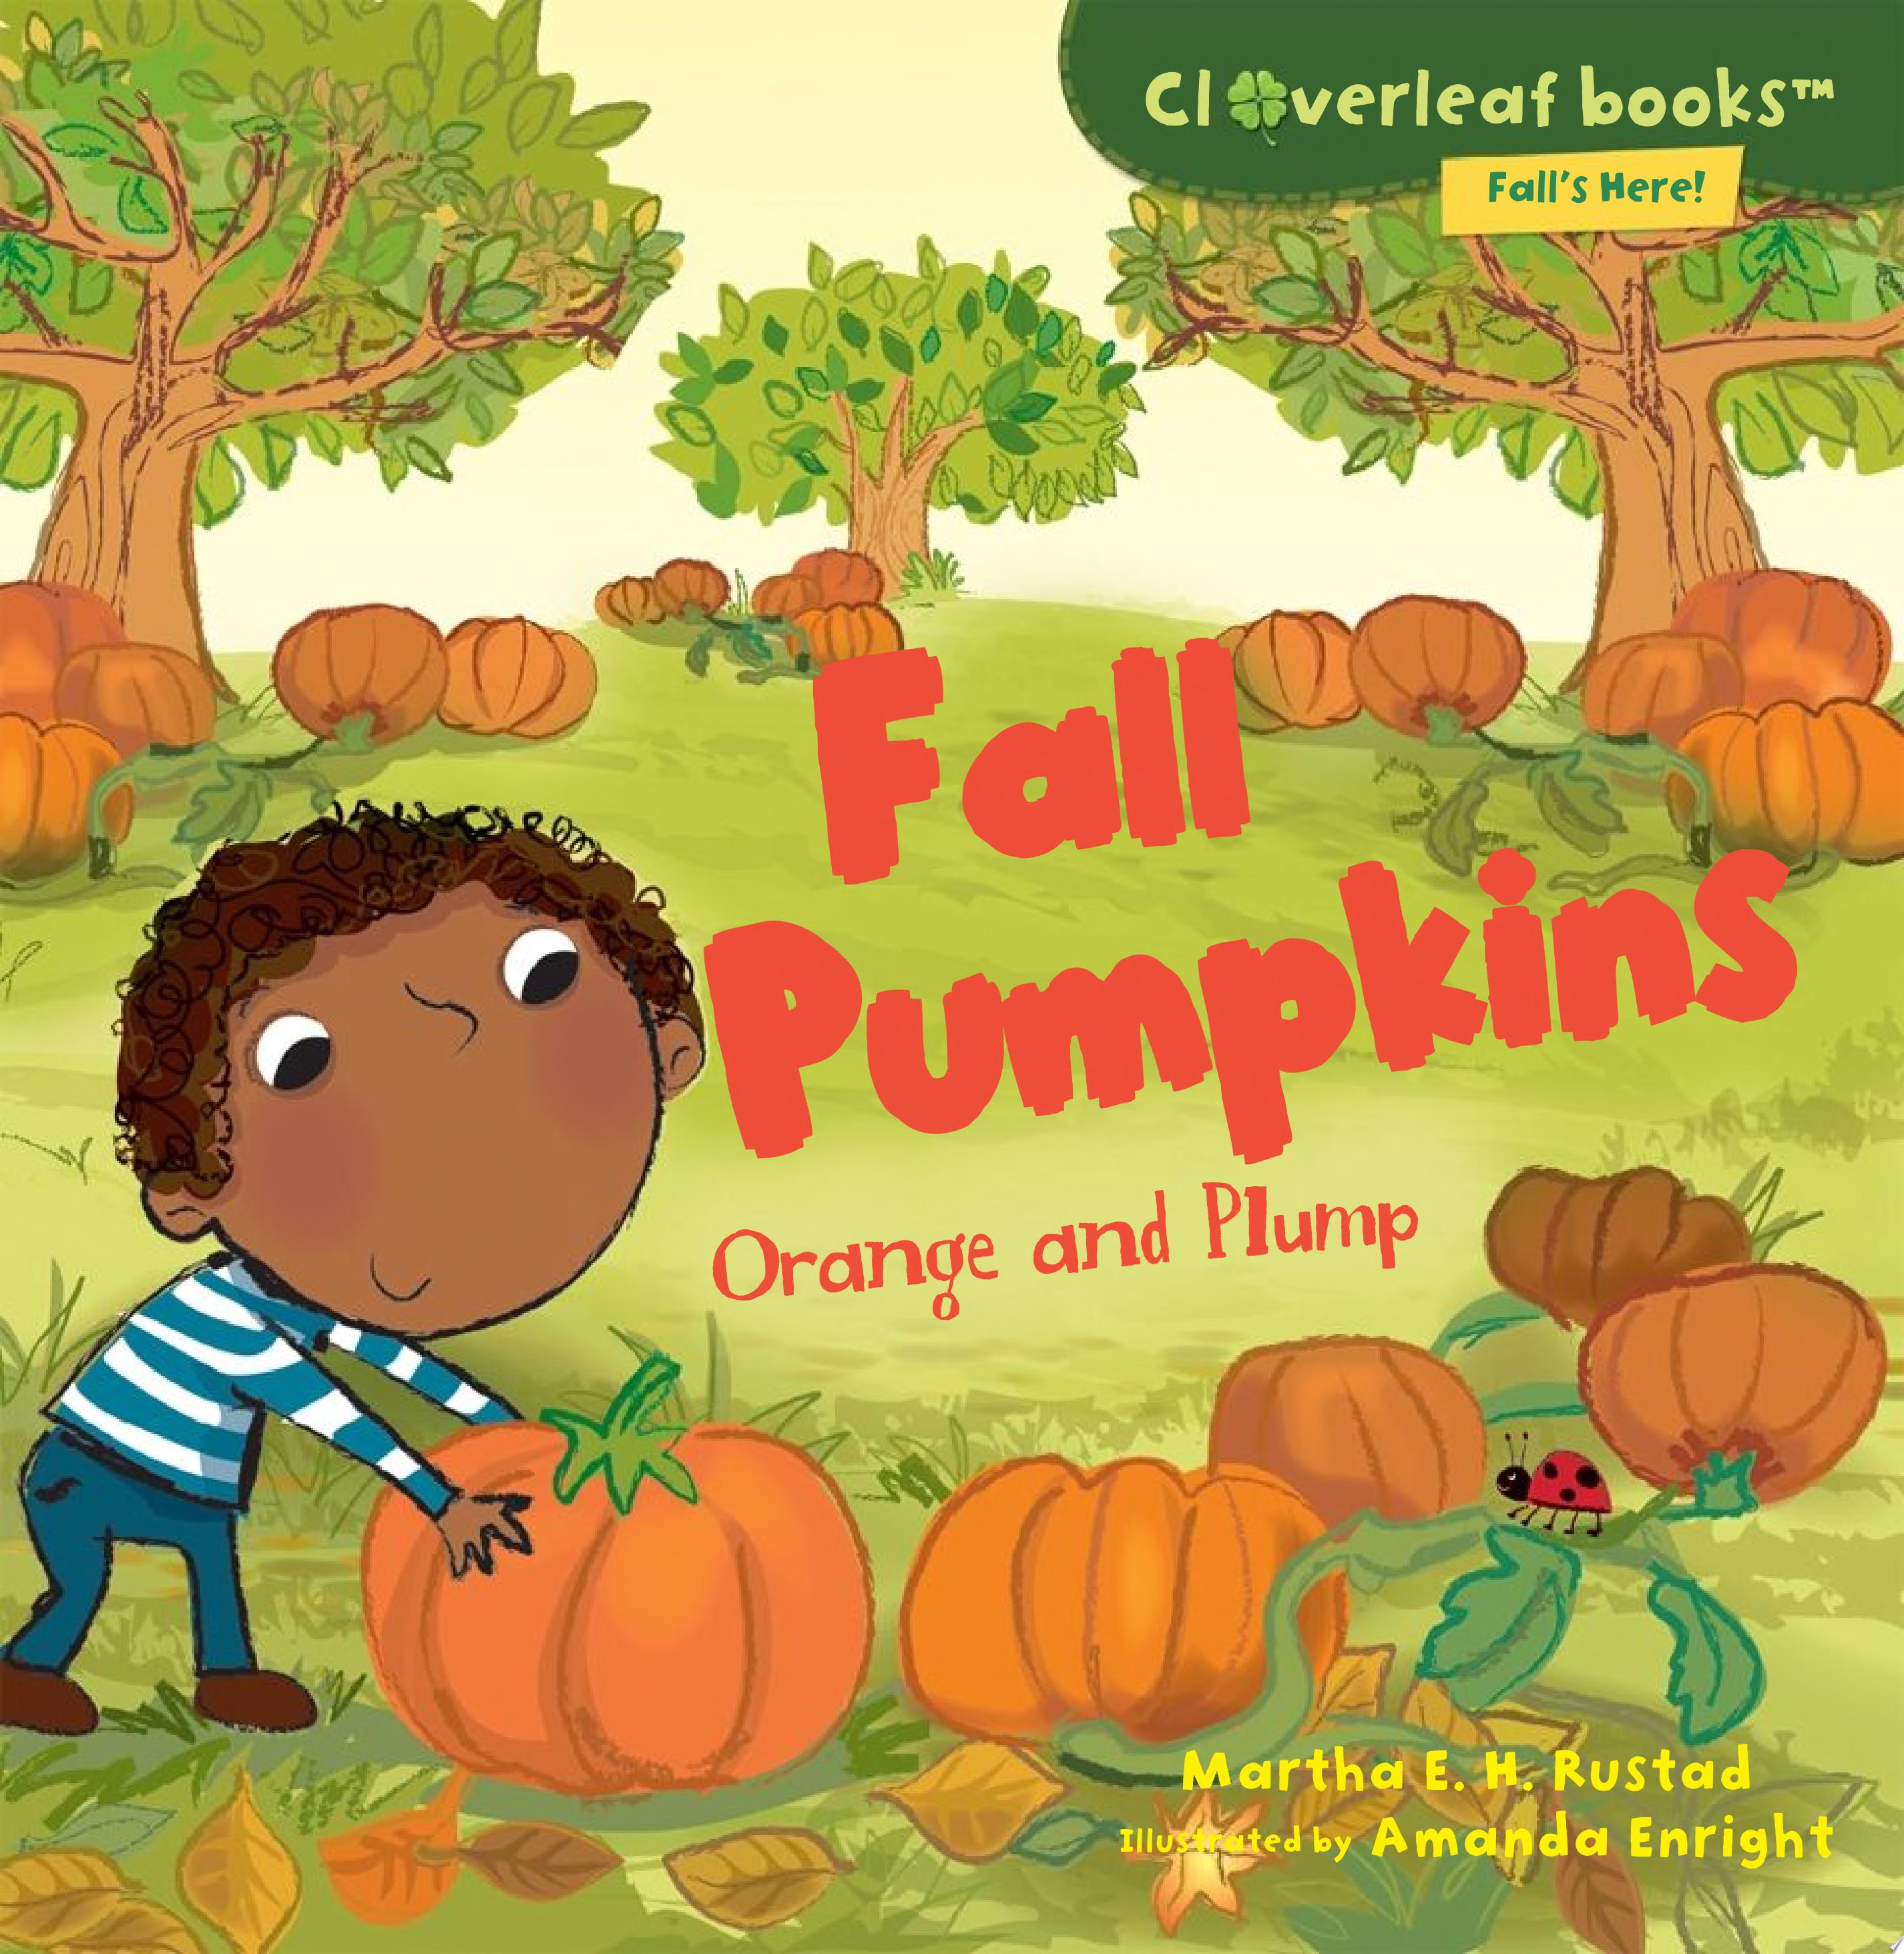 Image for "Fall Pumpkins"